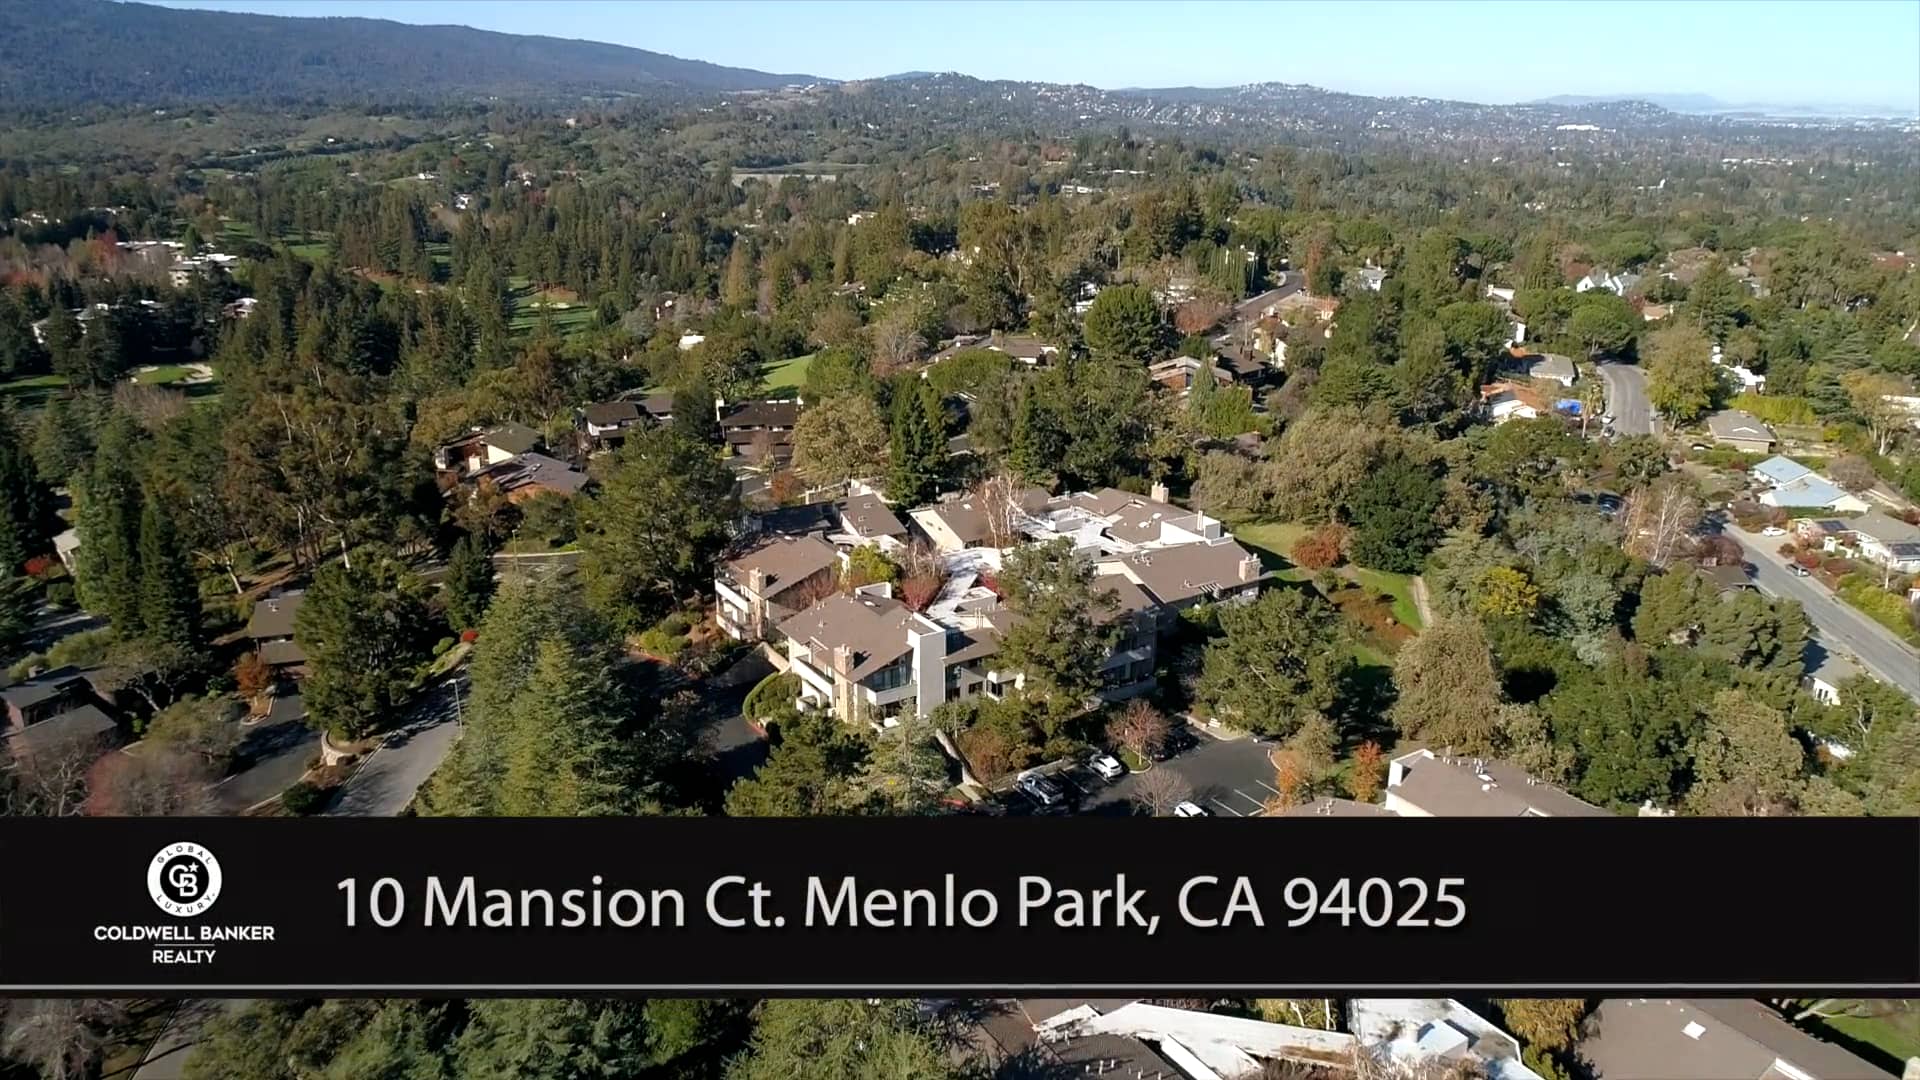 10 Mansion Court Menlo Park on Vimeo